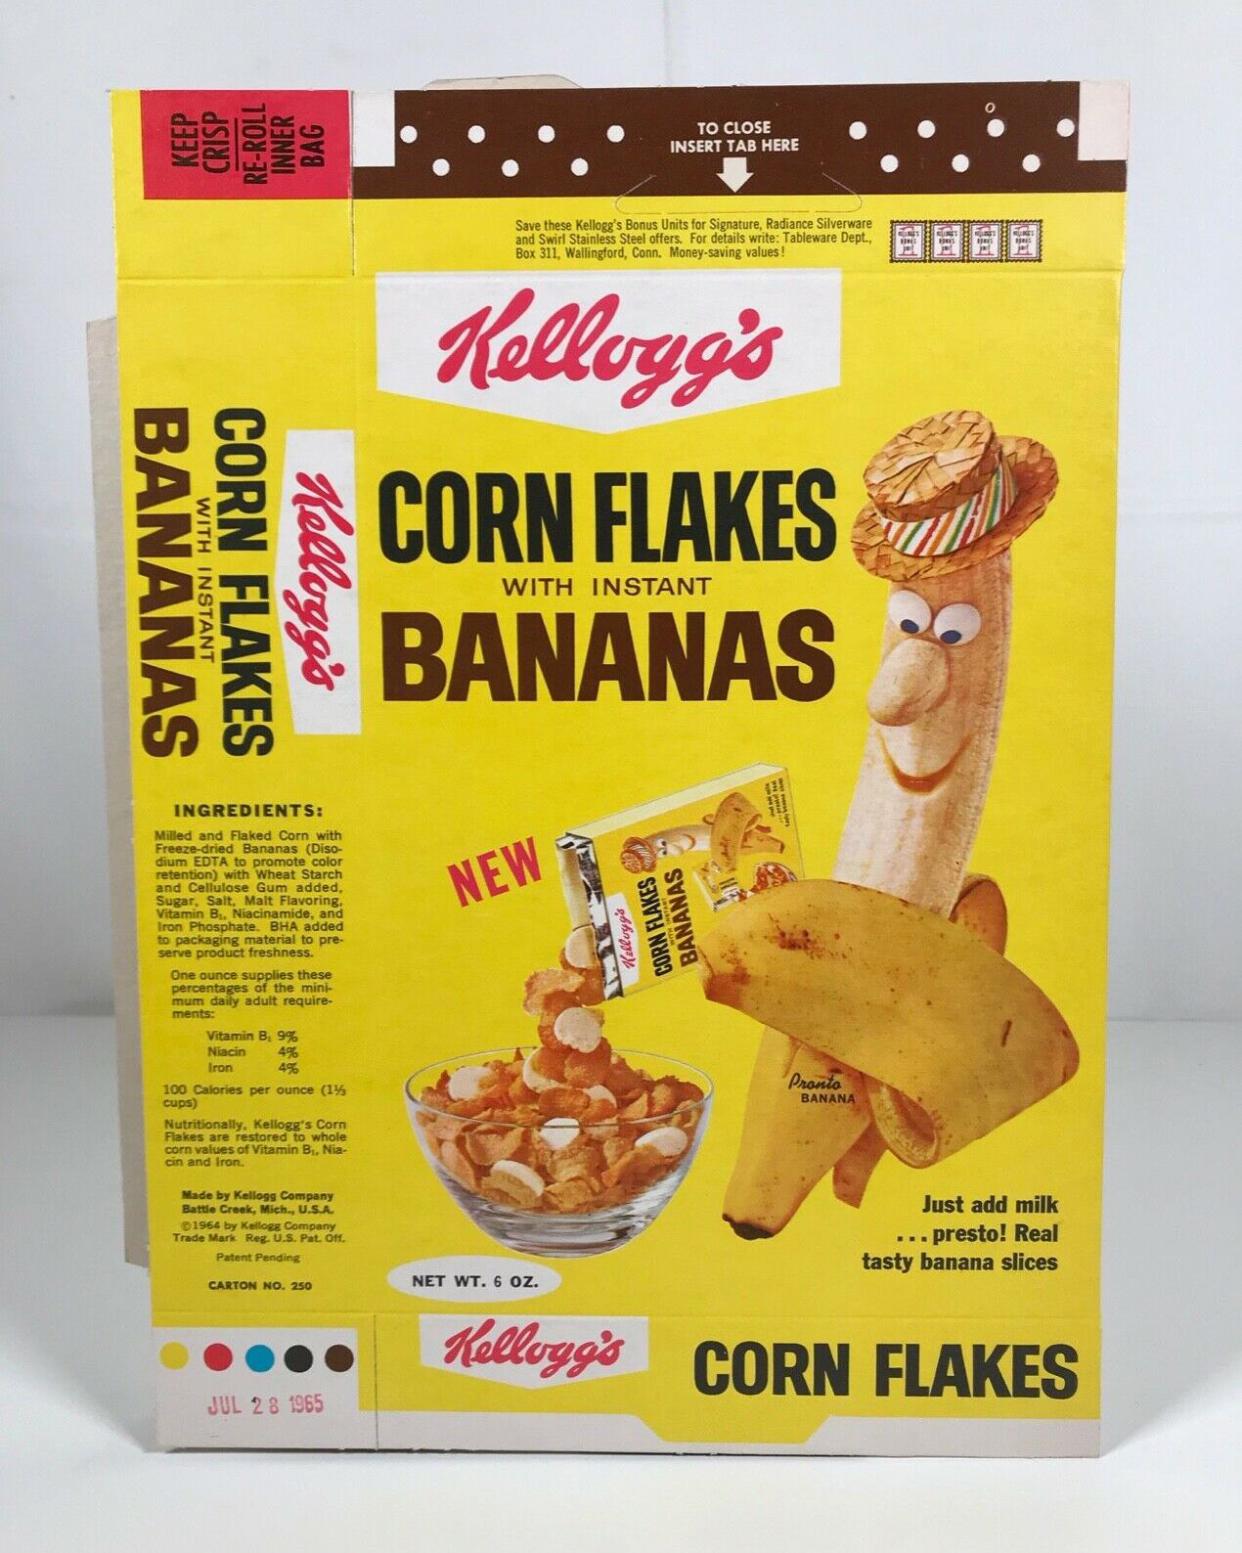 Kellogg's Banana Corn Flakes